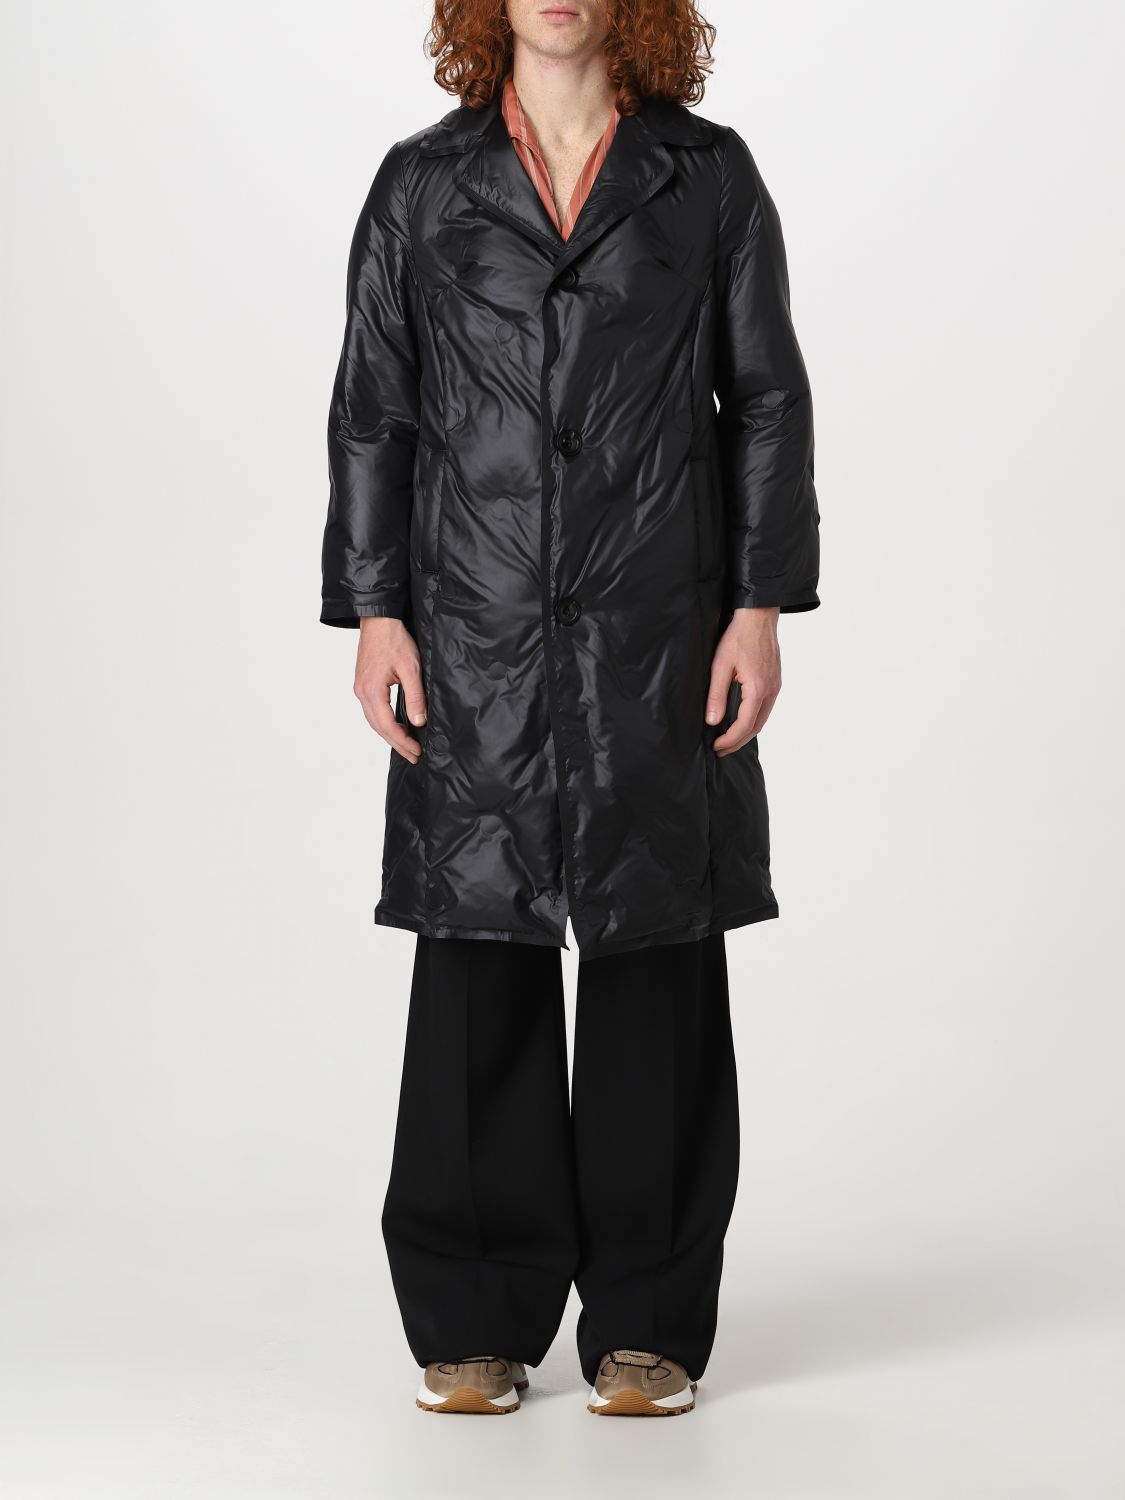 MAISON MARGIELA: coat for man - Black | Maison Margiela coat ...